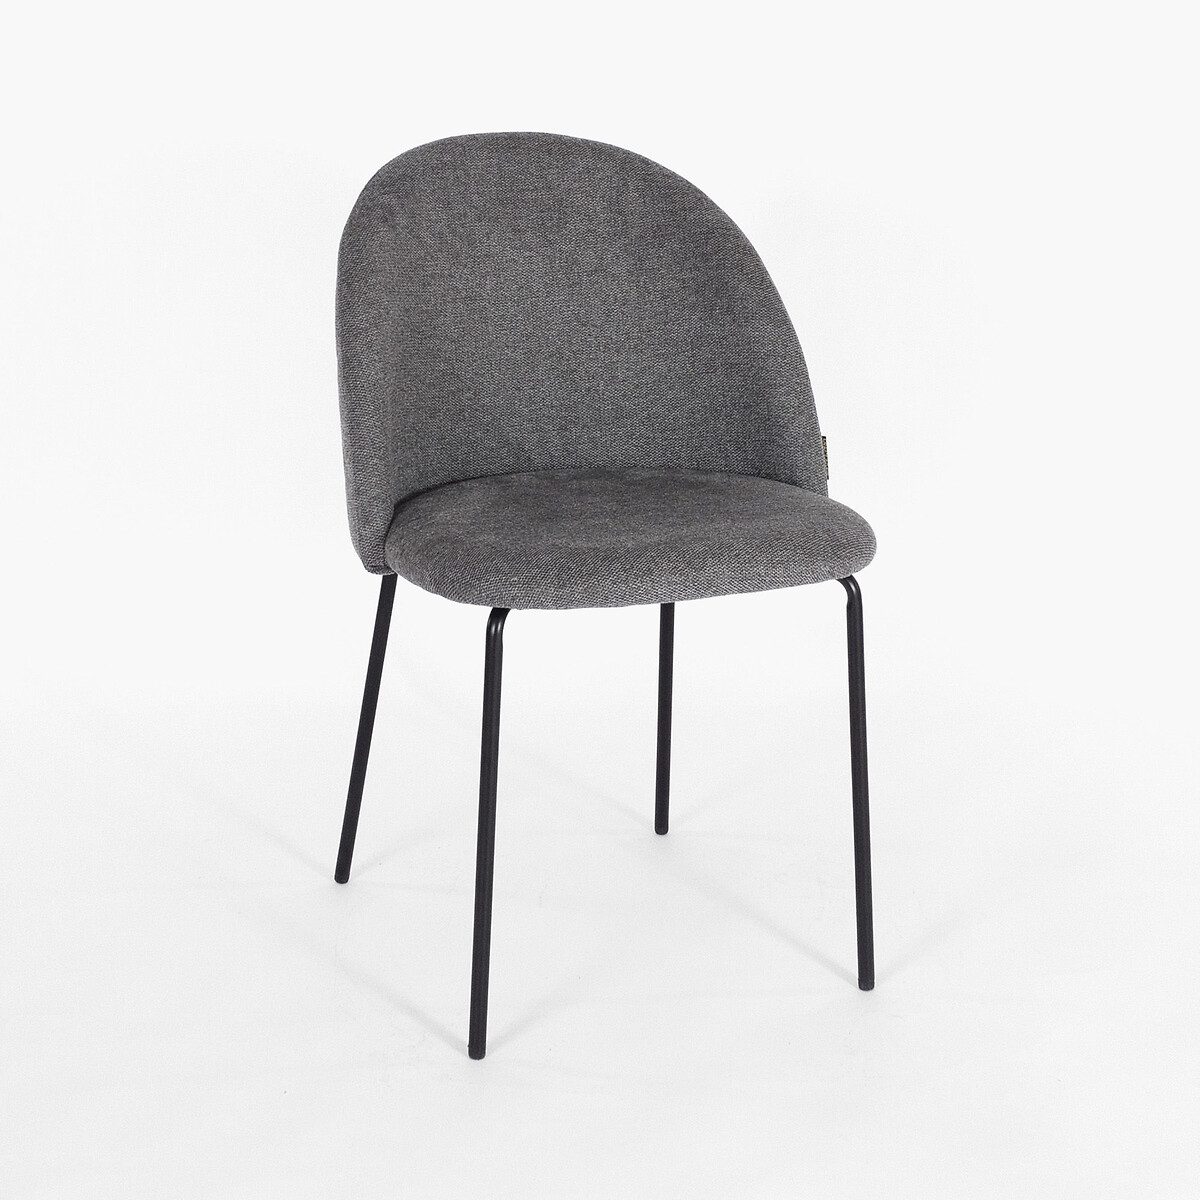 Стул Дижон единый размер серый стул с фланелевым покрытием tibby единый размер серый